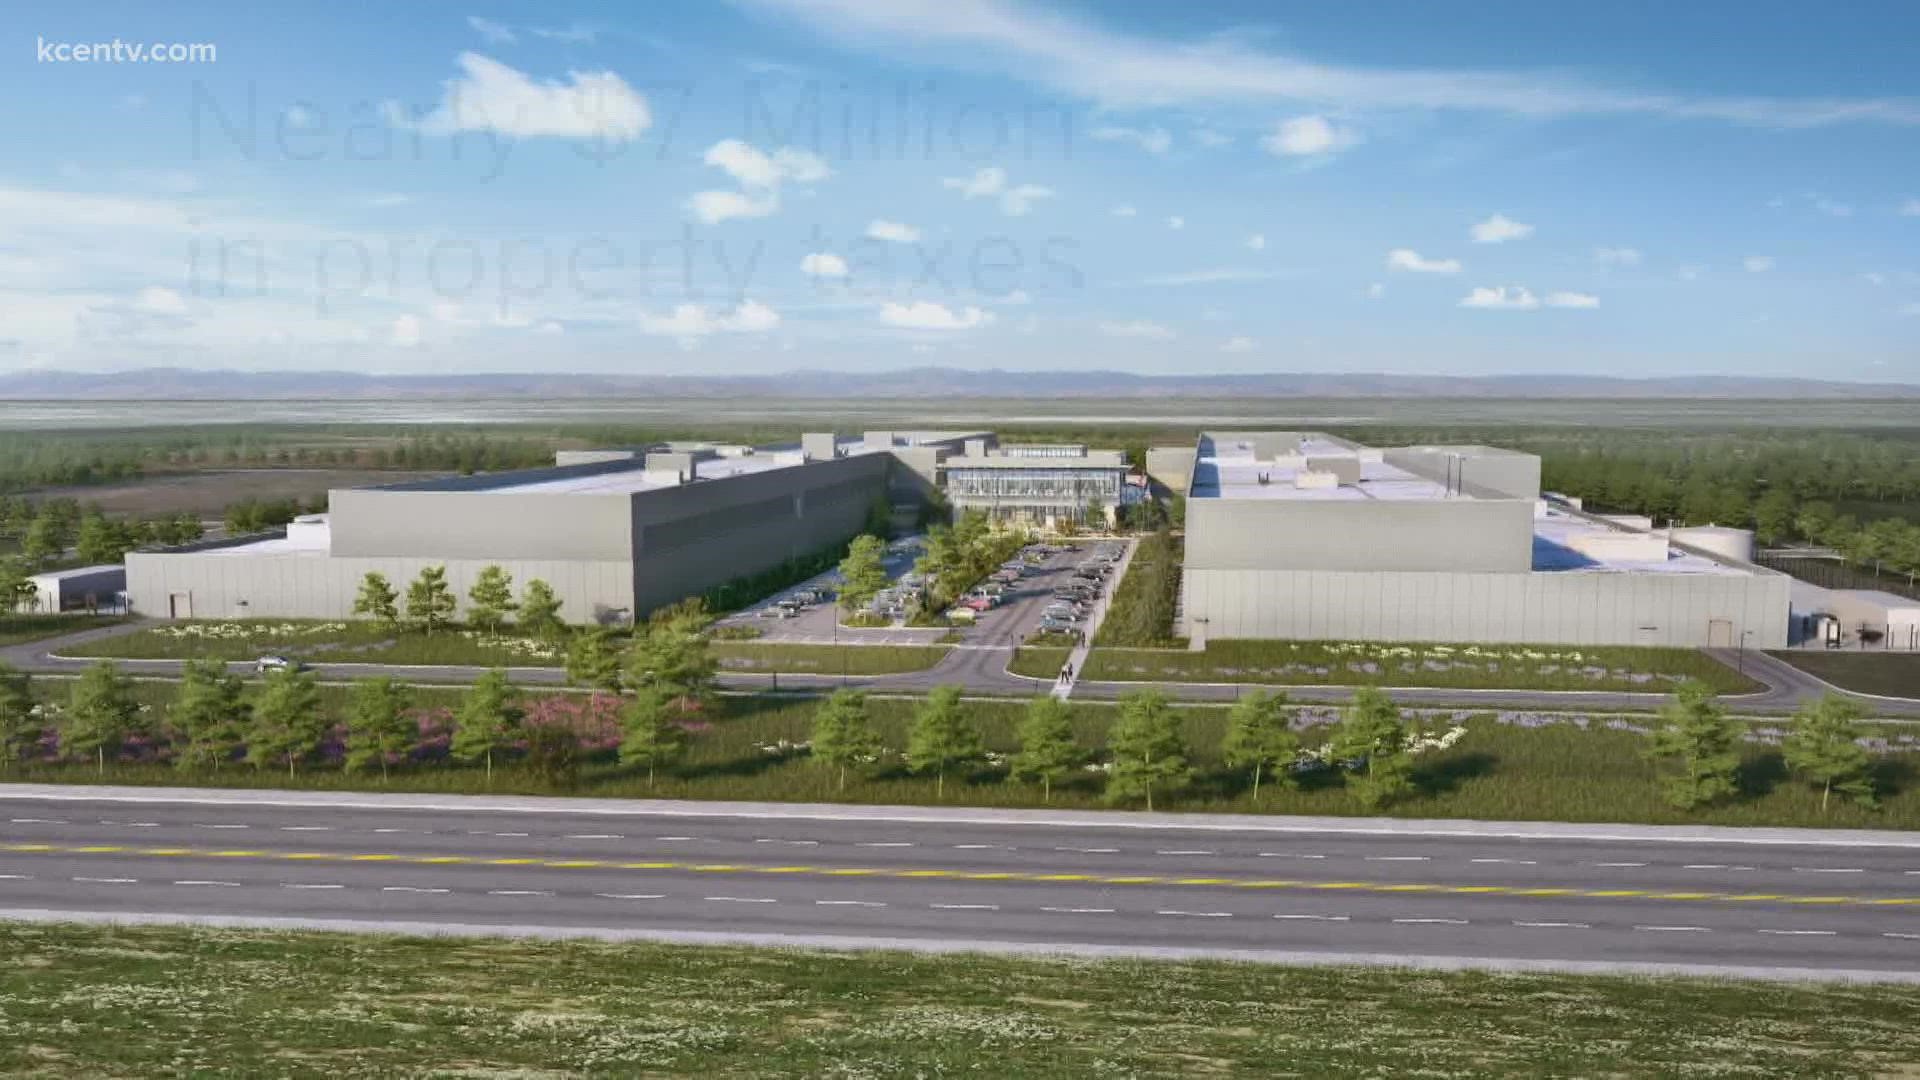 The Temple Economic Development Corporation says the $800 million facility will total 900,000 square feet.